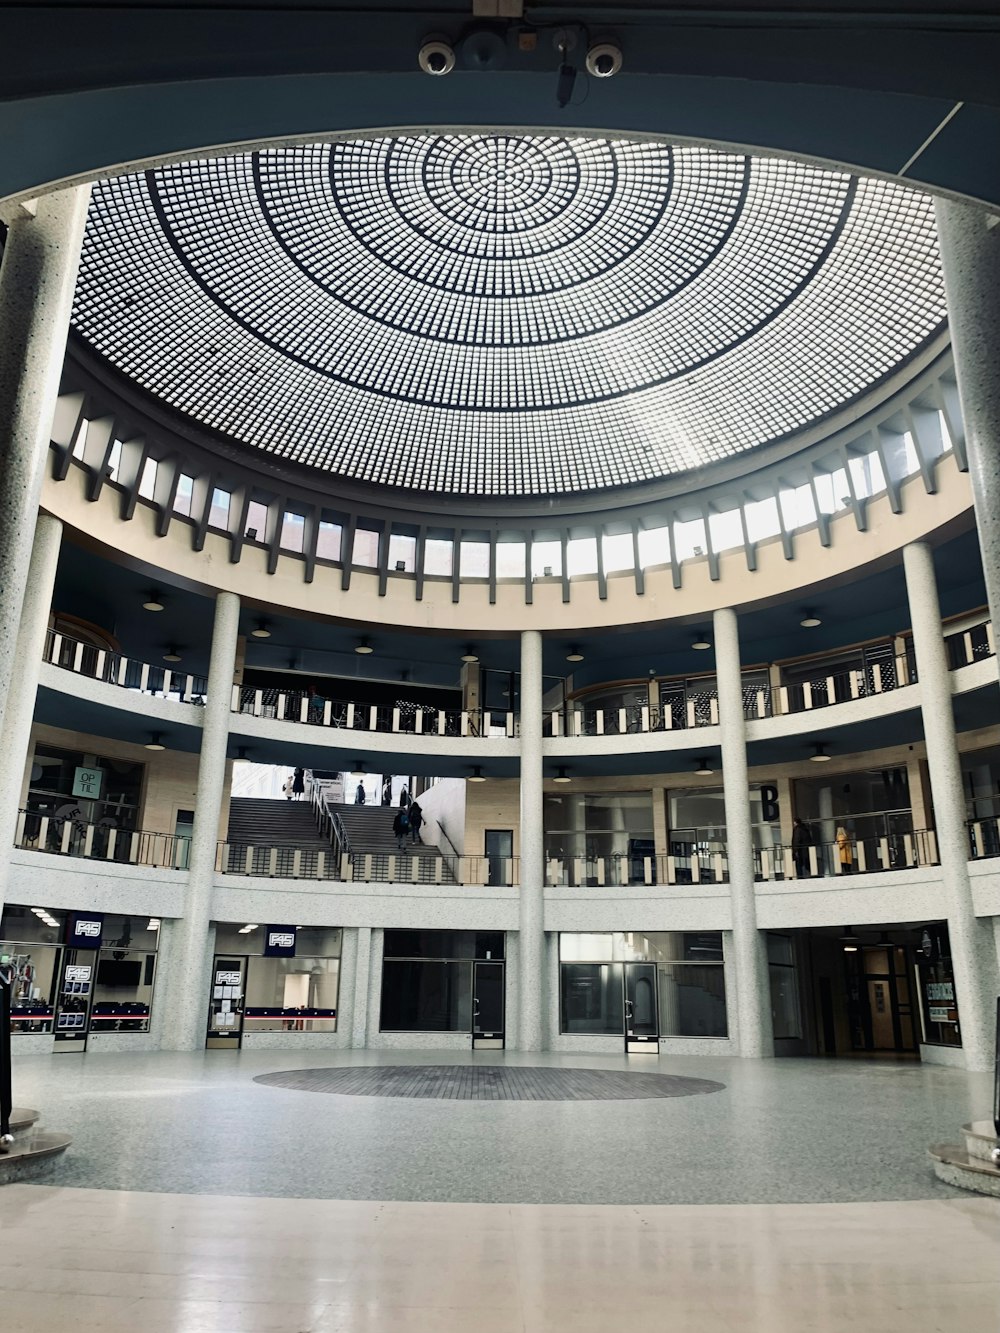 a large circular building with a circular ceiling